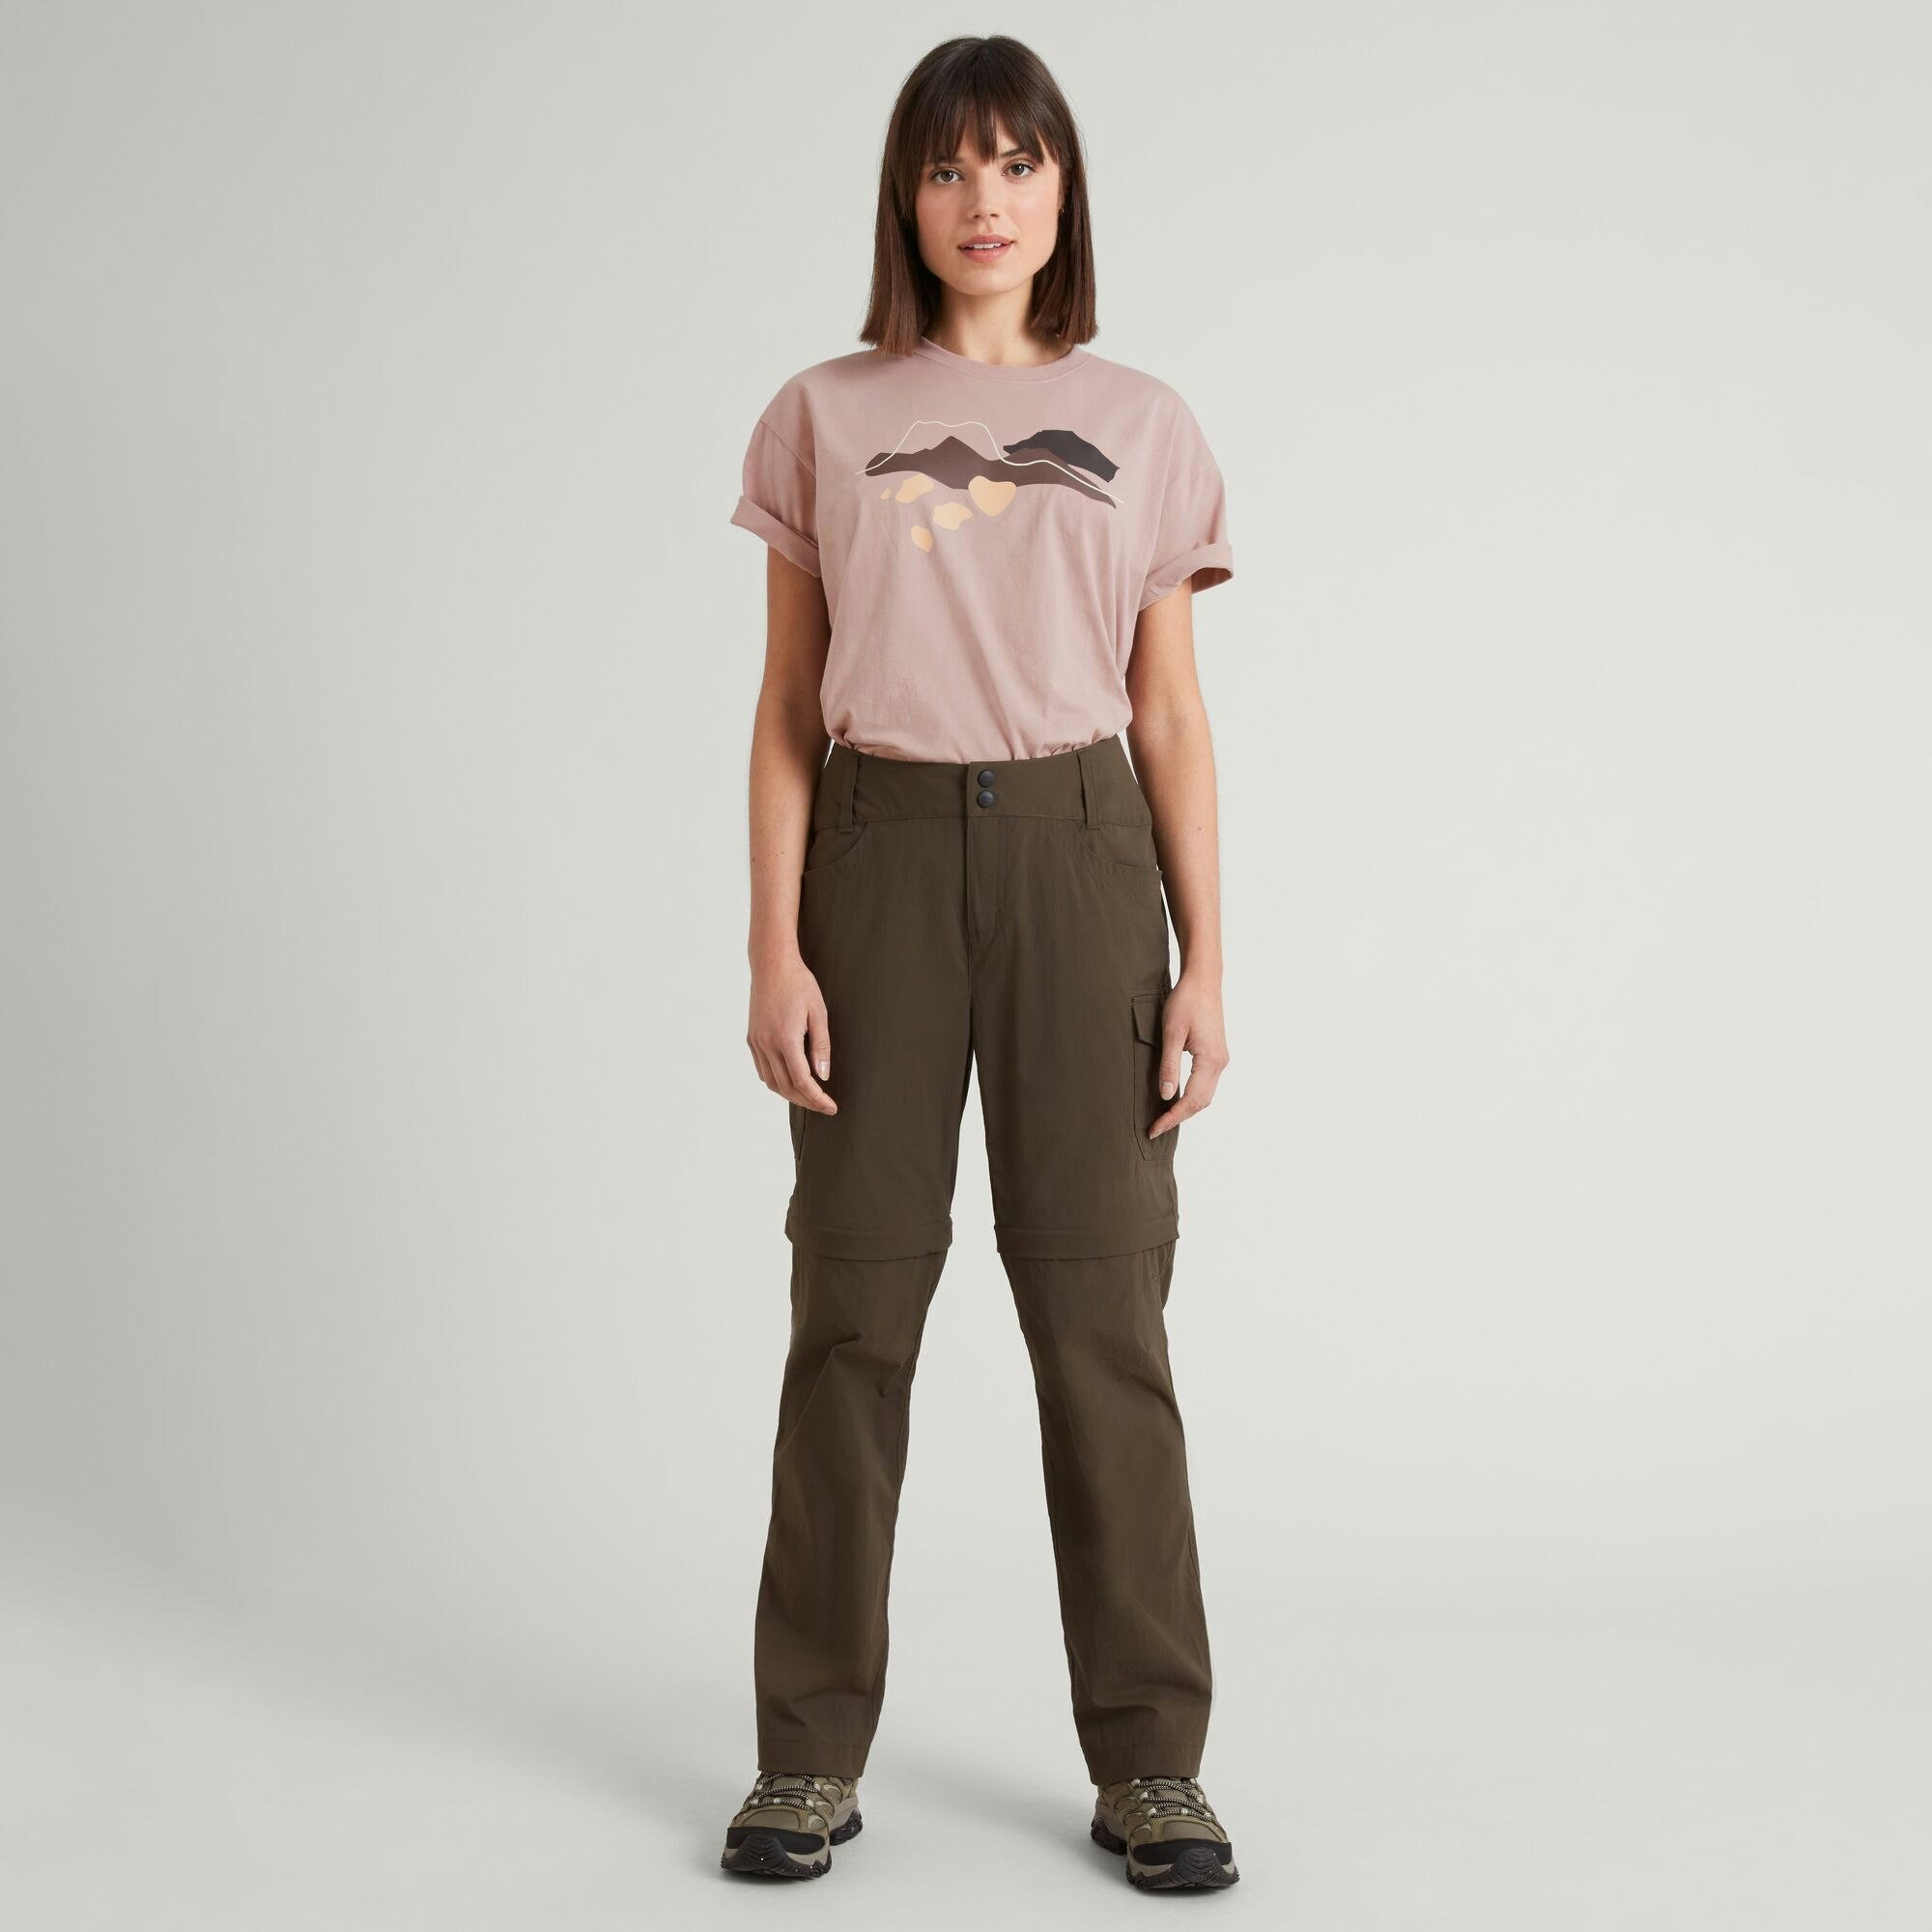 Outdoor & Safari Pants | Women's Convertible Pants | The Safari Store